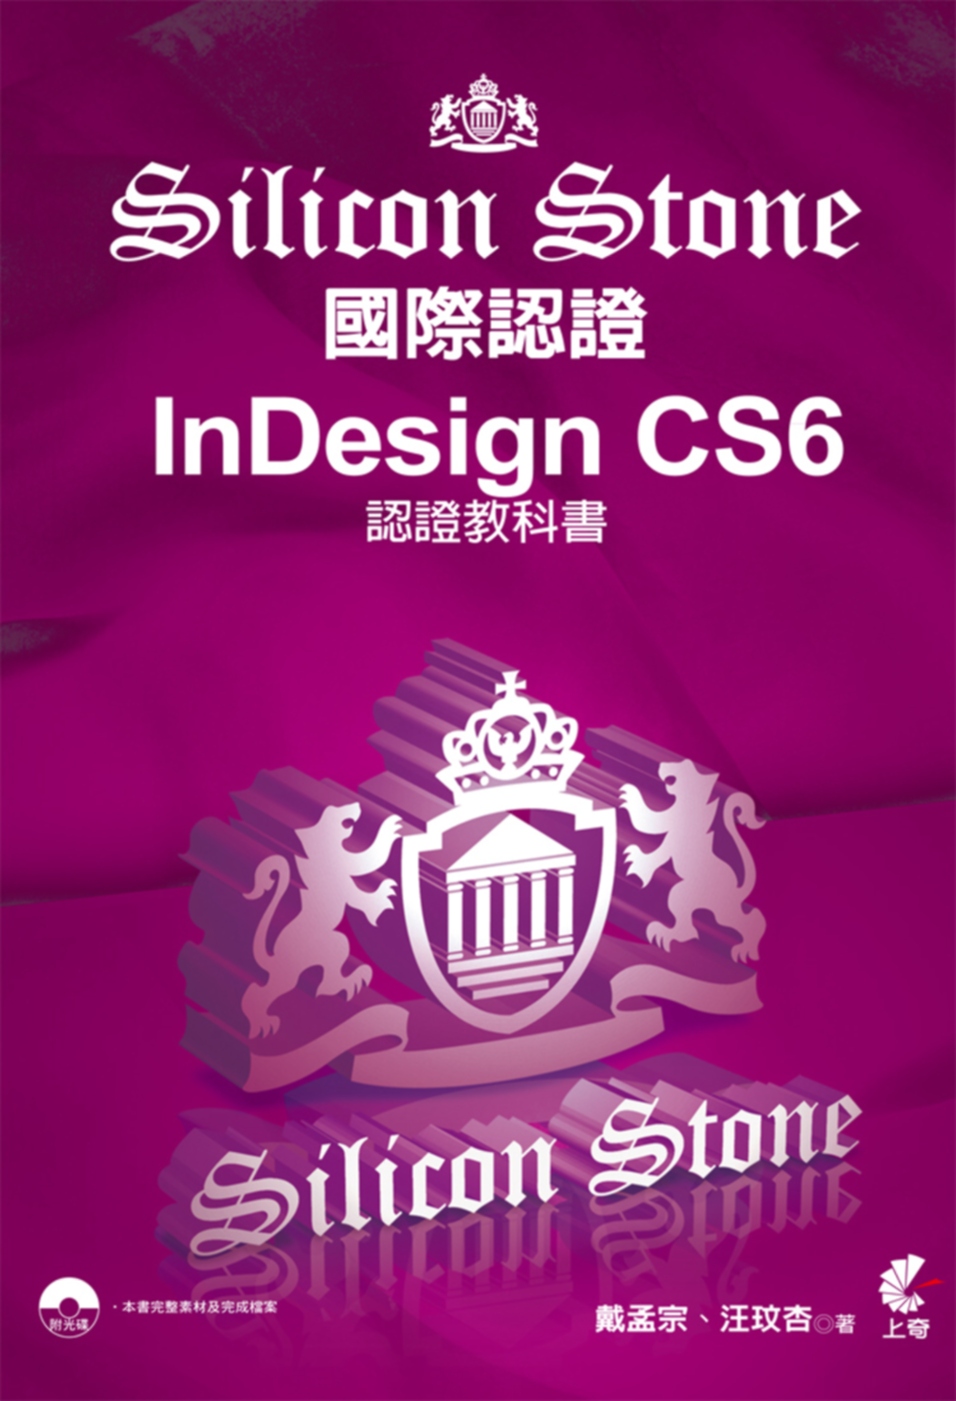 Indesign CS6 Silicon Stone 認證教...